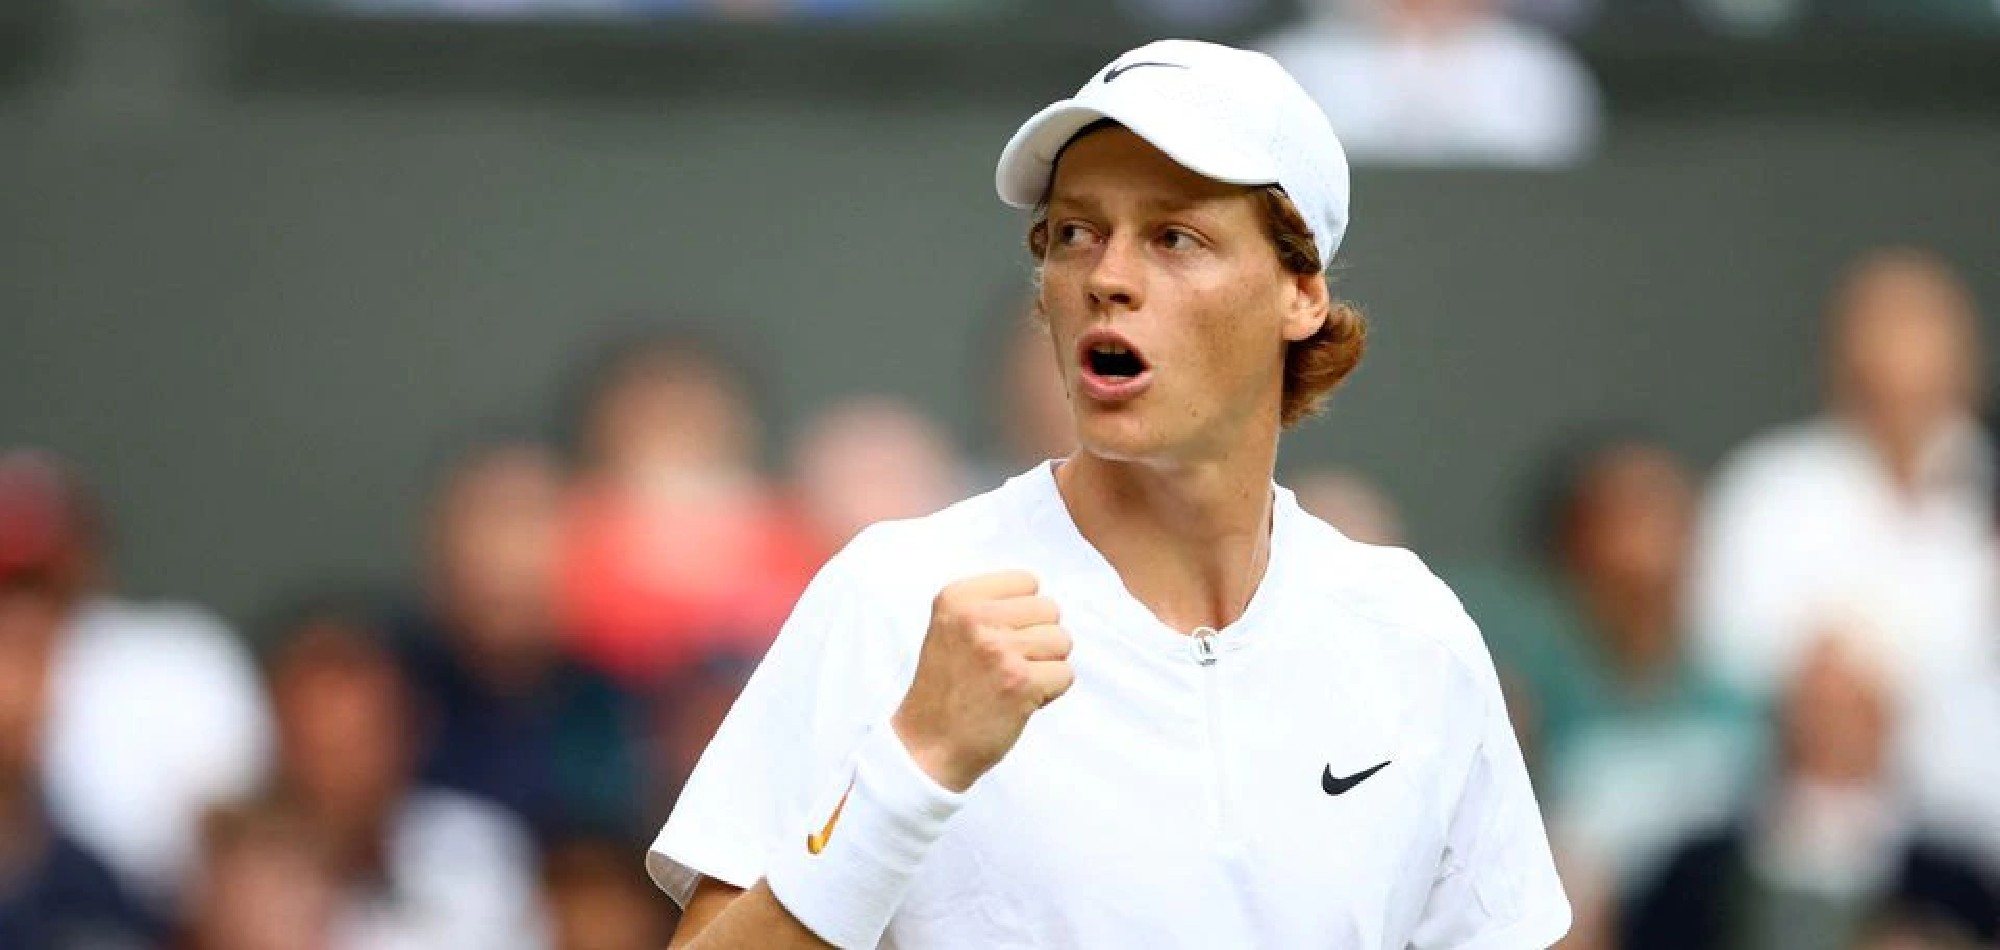 Sinner, Alcaraz hoping Wimbledon marks start of Grand Slam rivalry